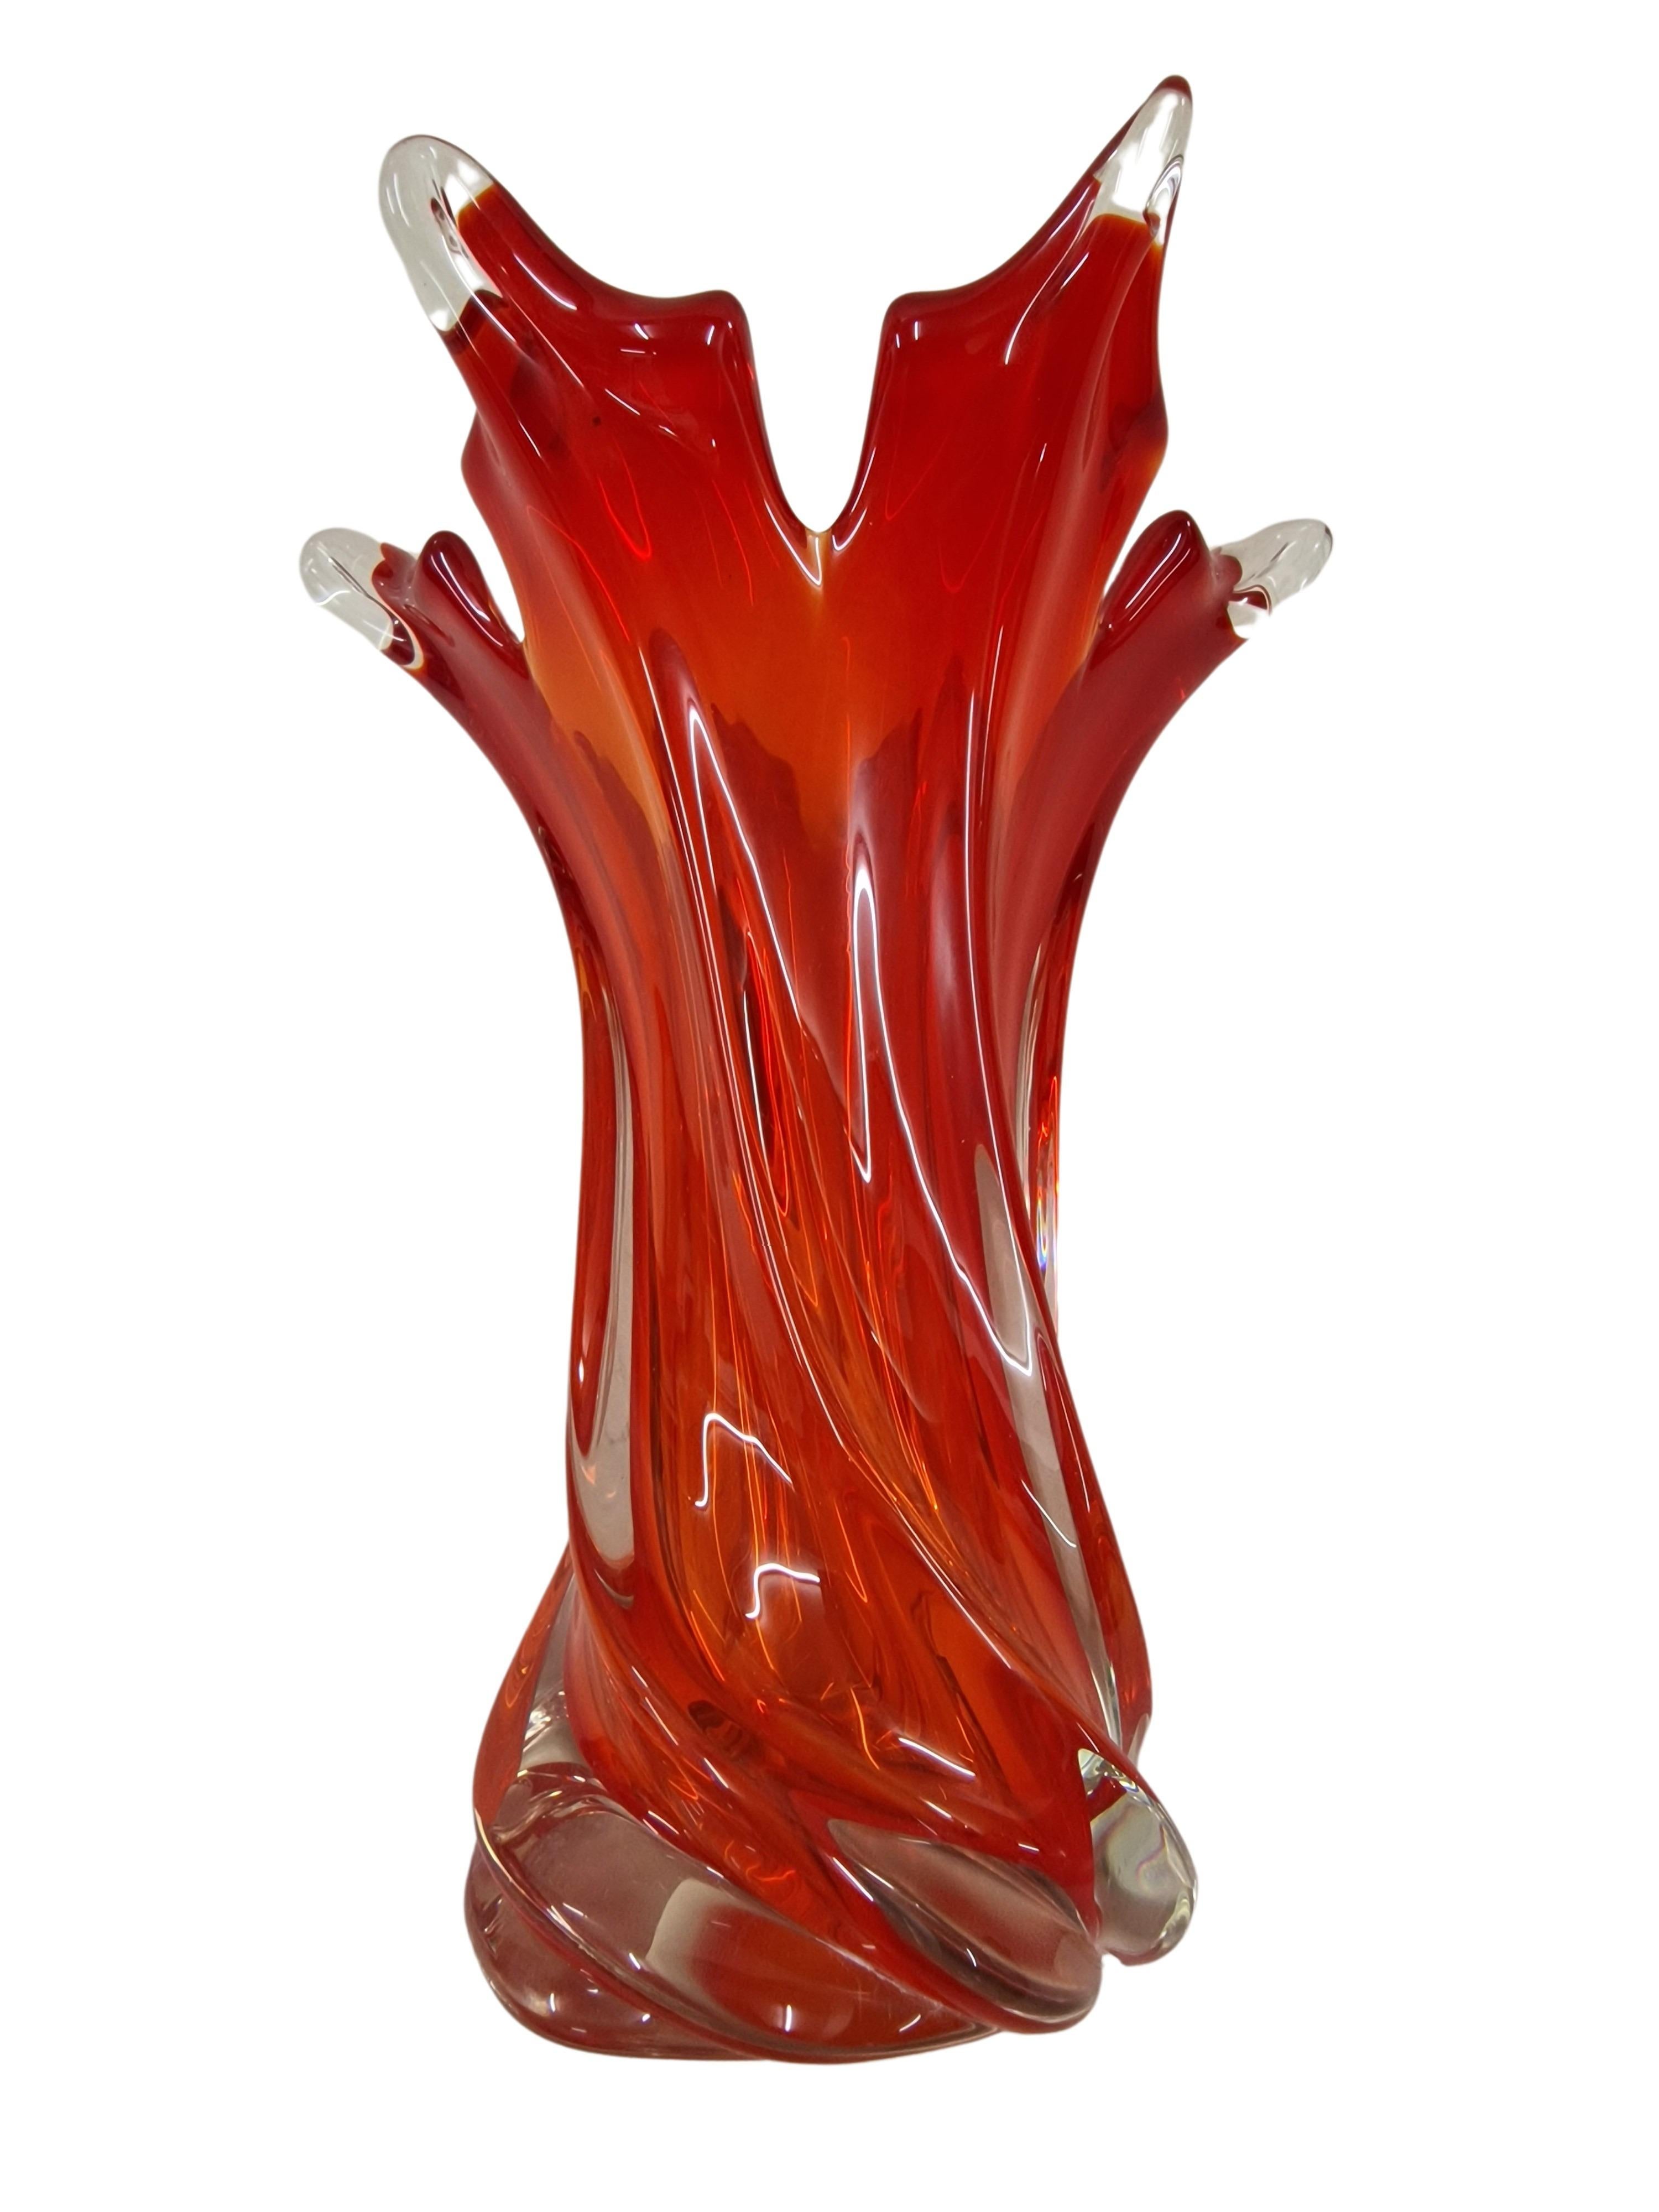 Decorative flower vase, Murano art glass, blown glass, 1970s Murano Venice Italy For Sale 1